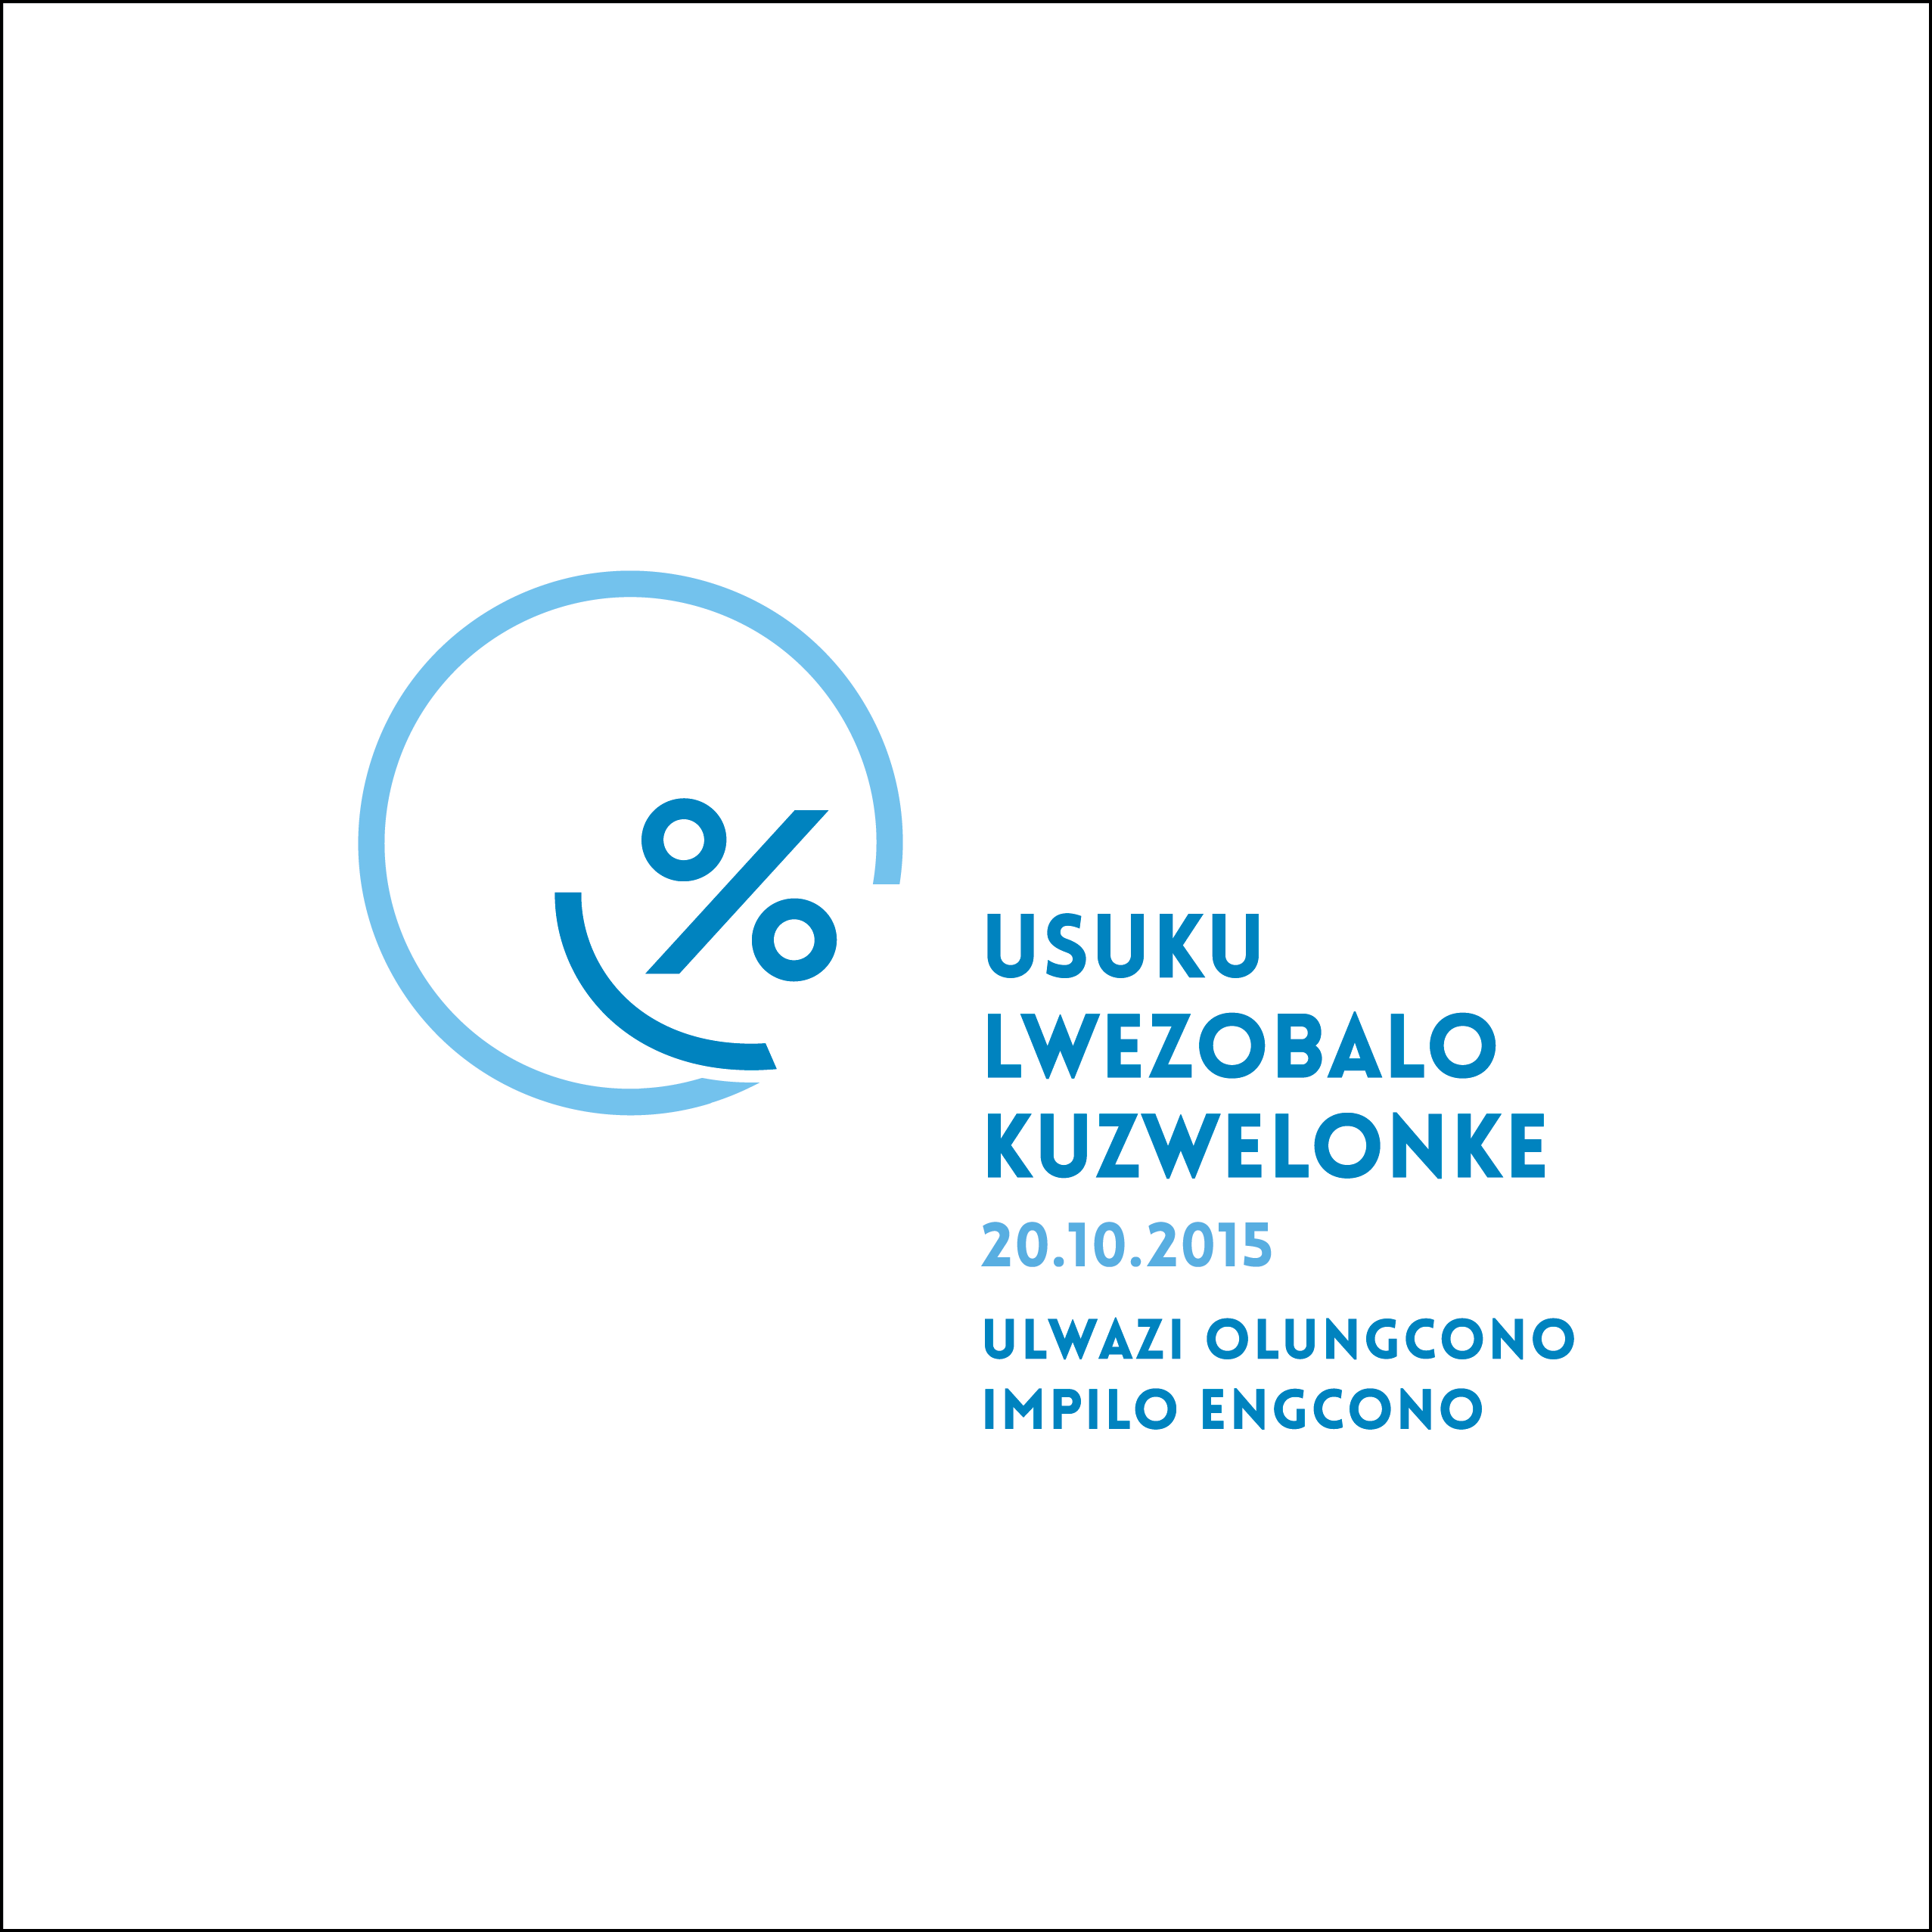 World Statistics Day Logo in Zulu